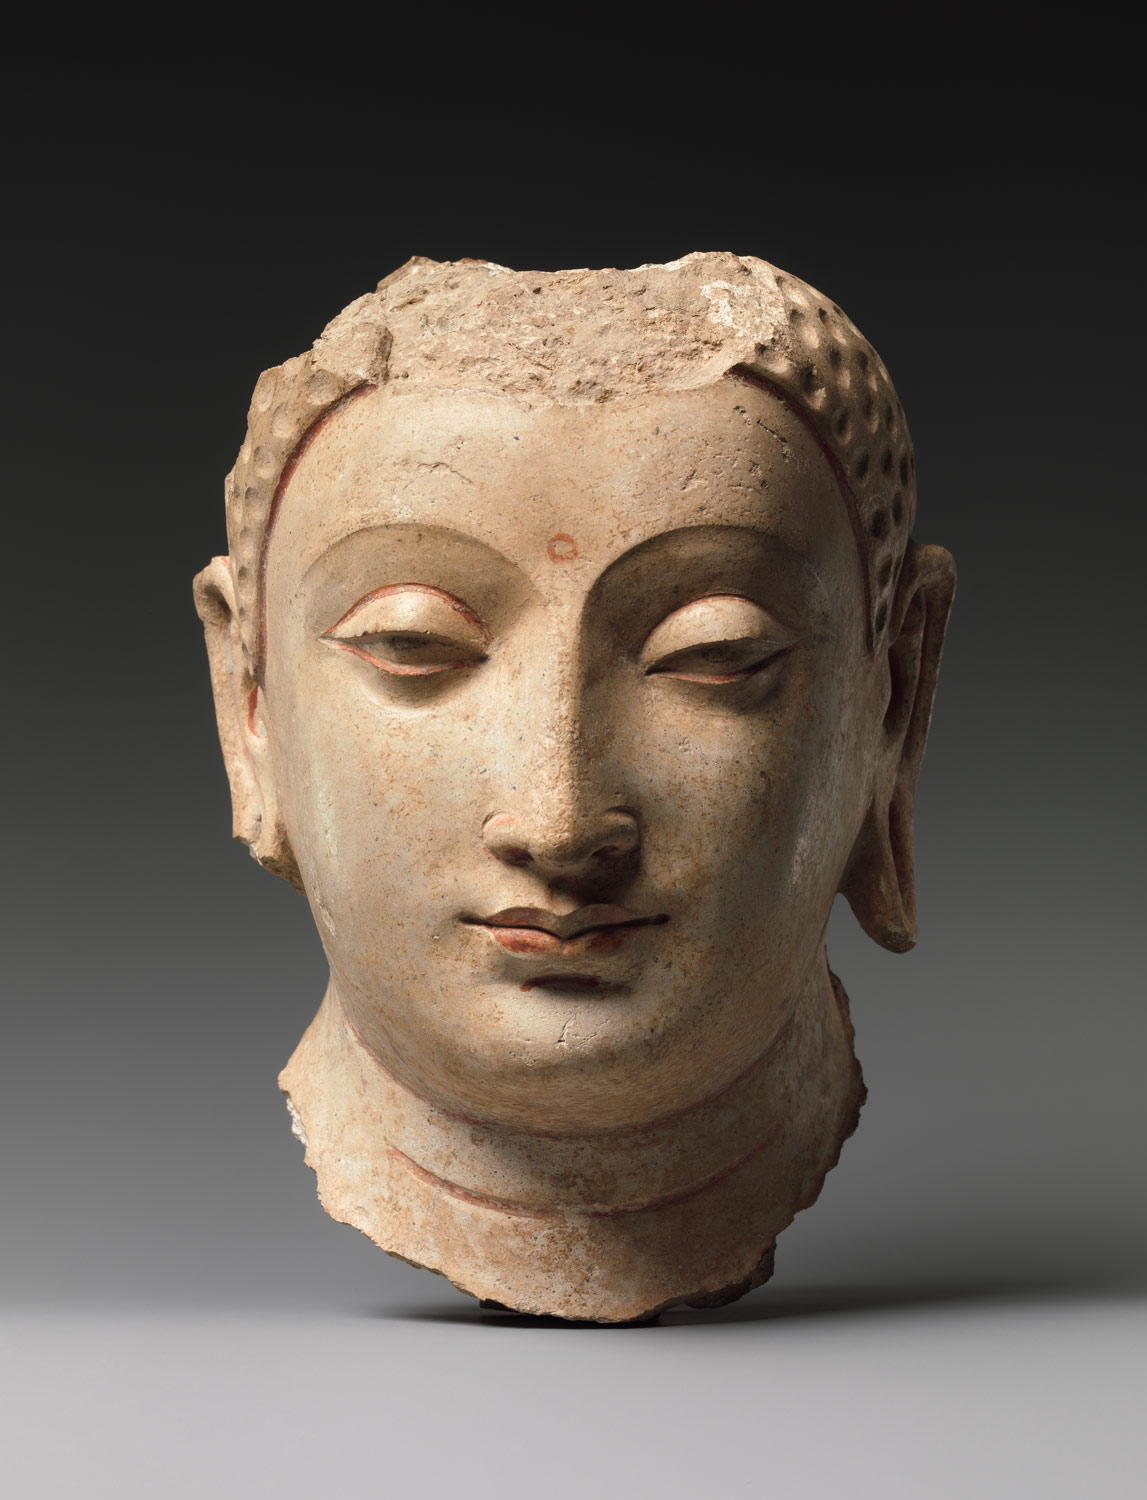 Head Of Buddha Work Of Art Heilbrunn Timeline Of Art History The